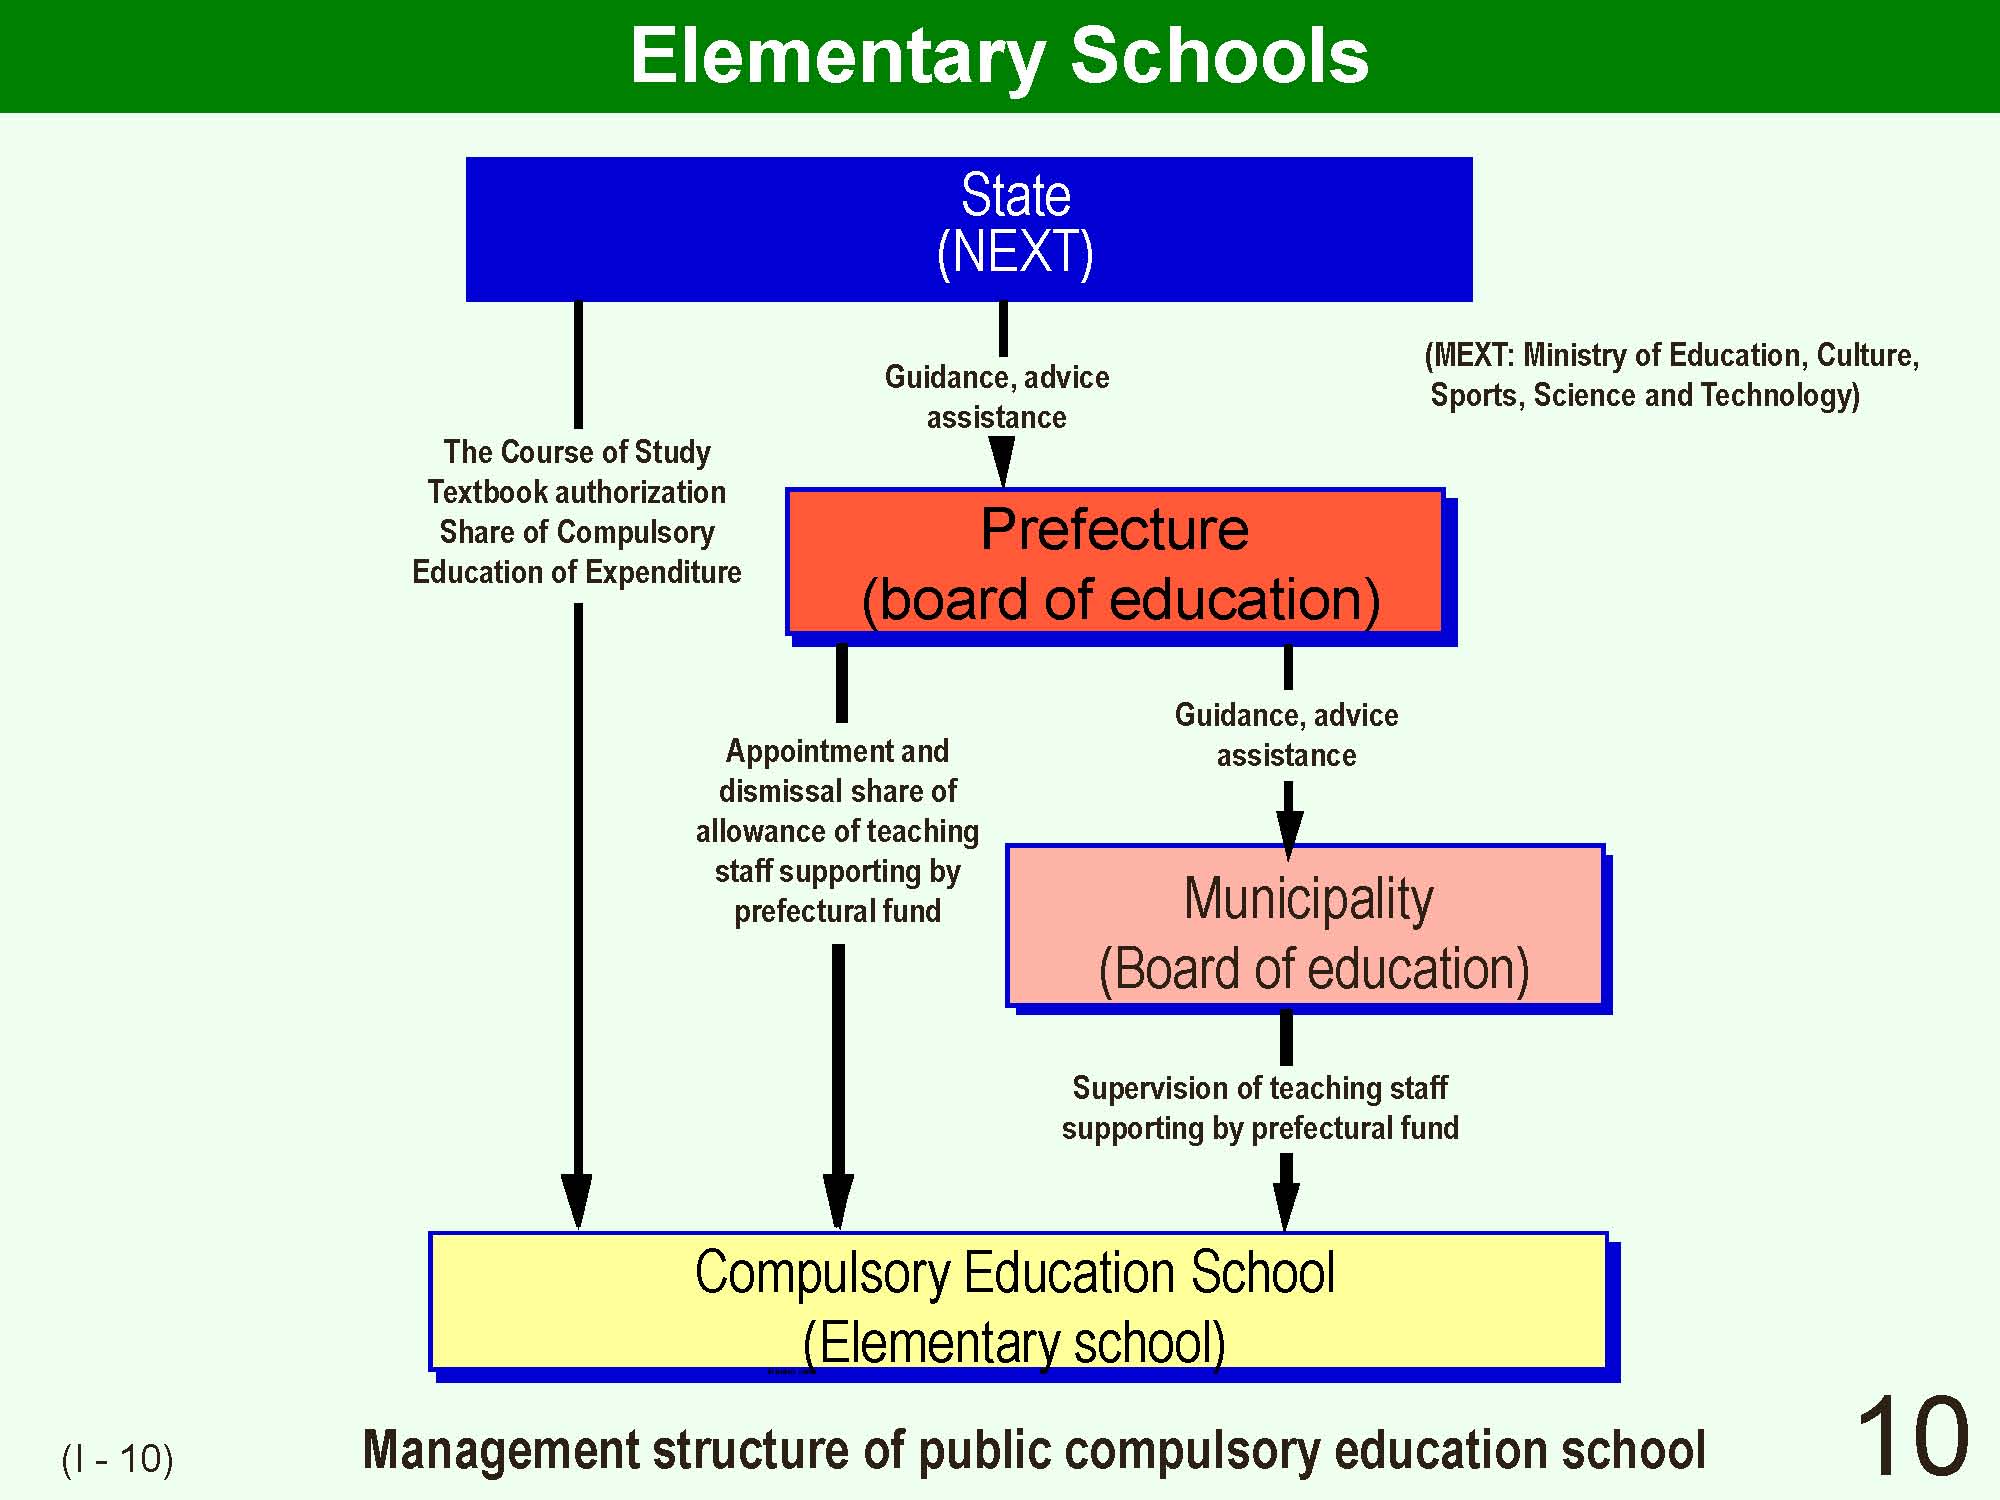 I Outline of Japanese School System